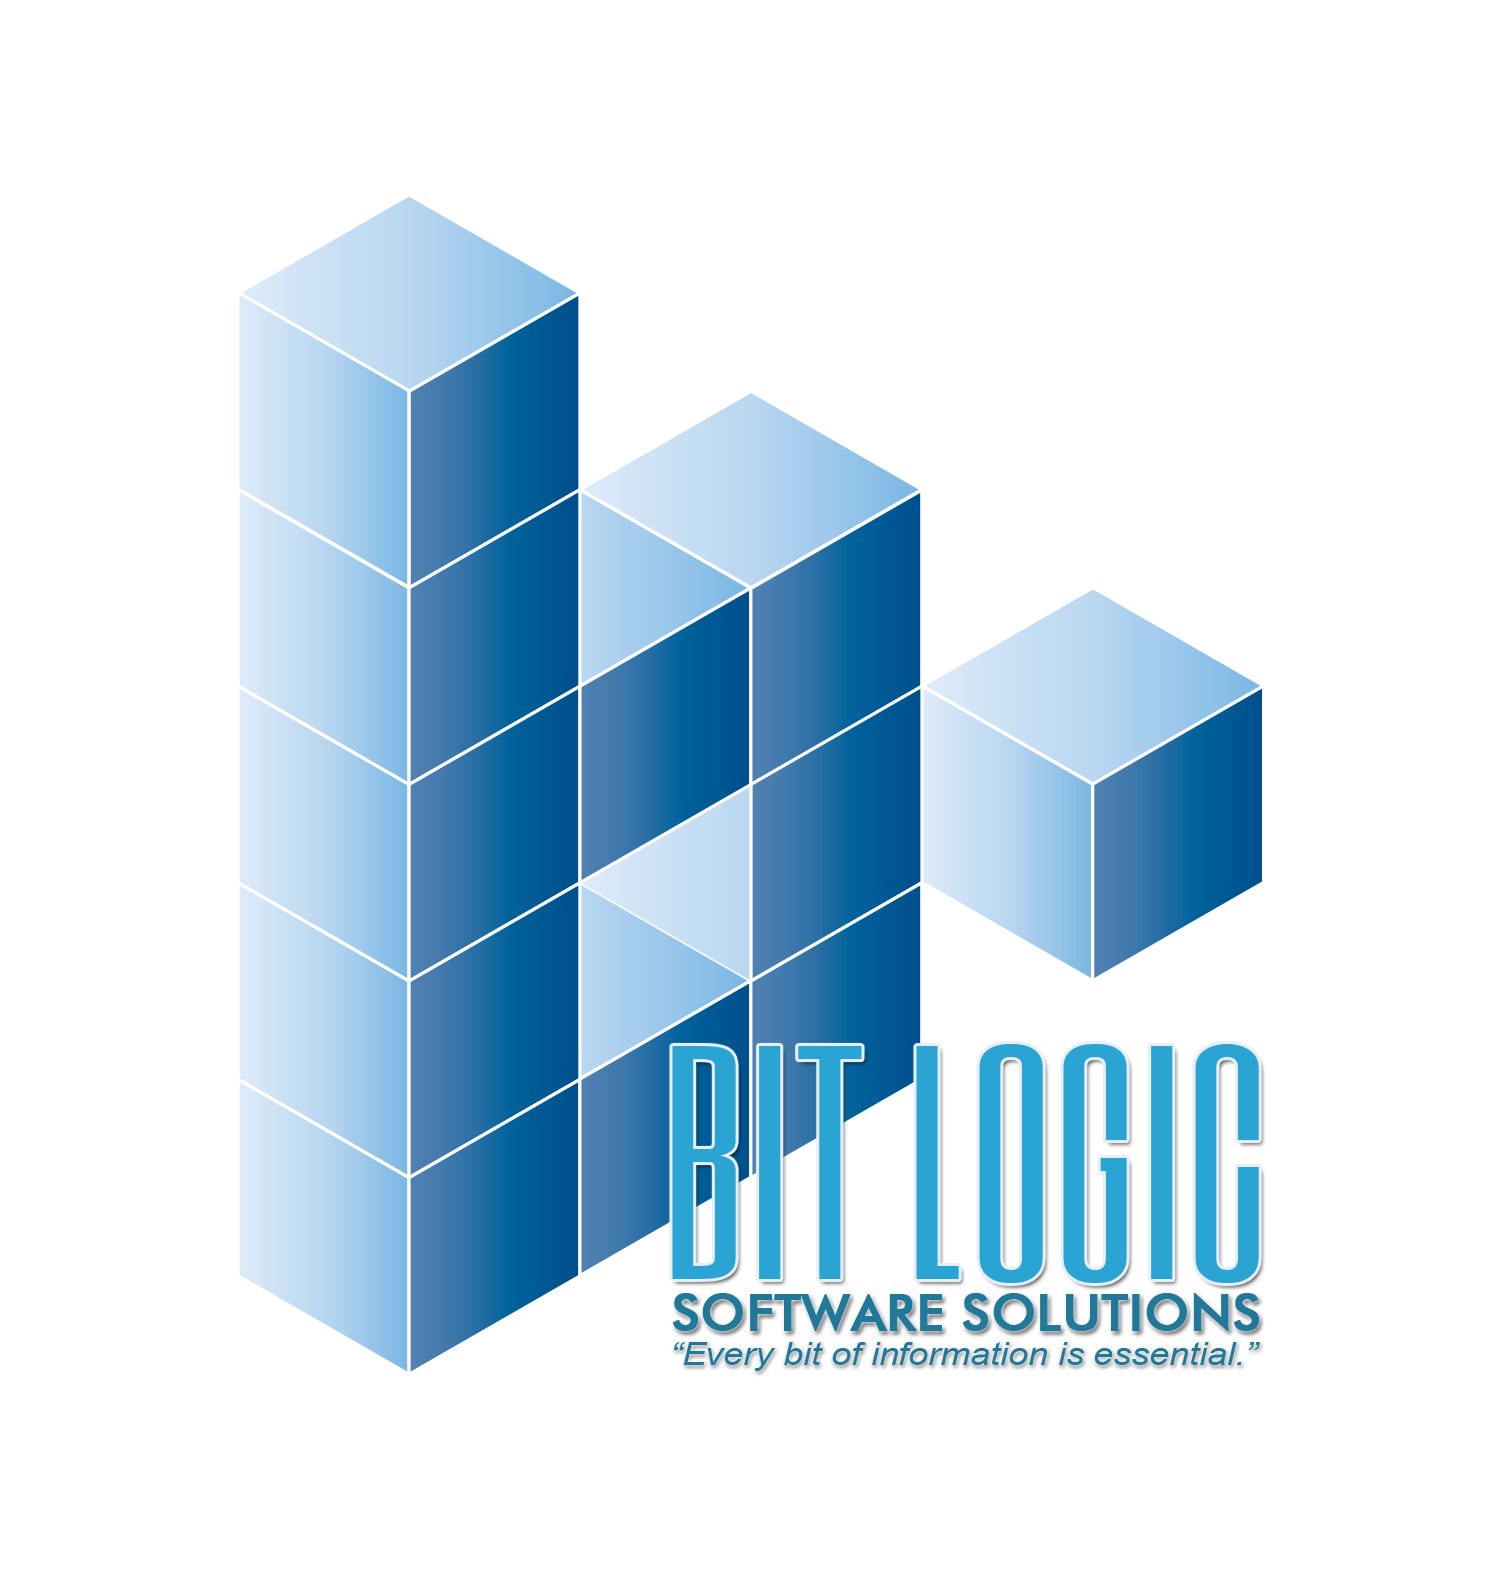 Bit Logic Software Solutions